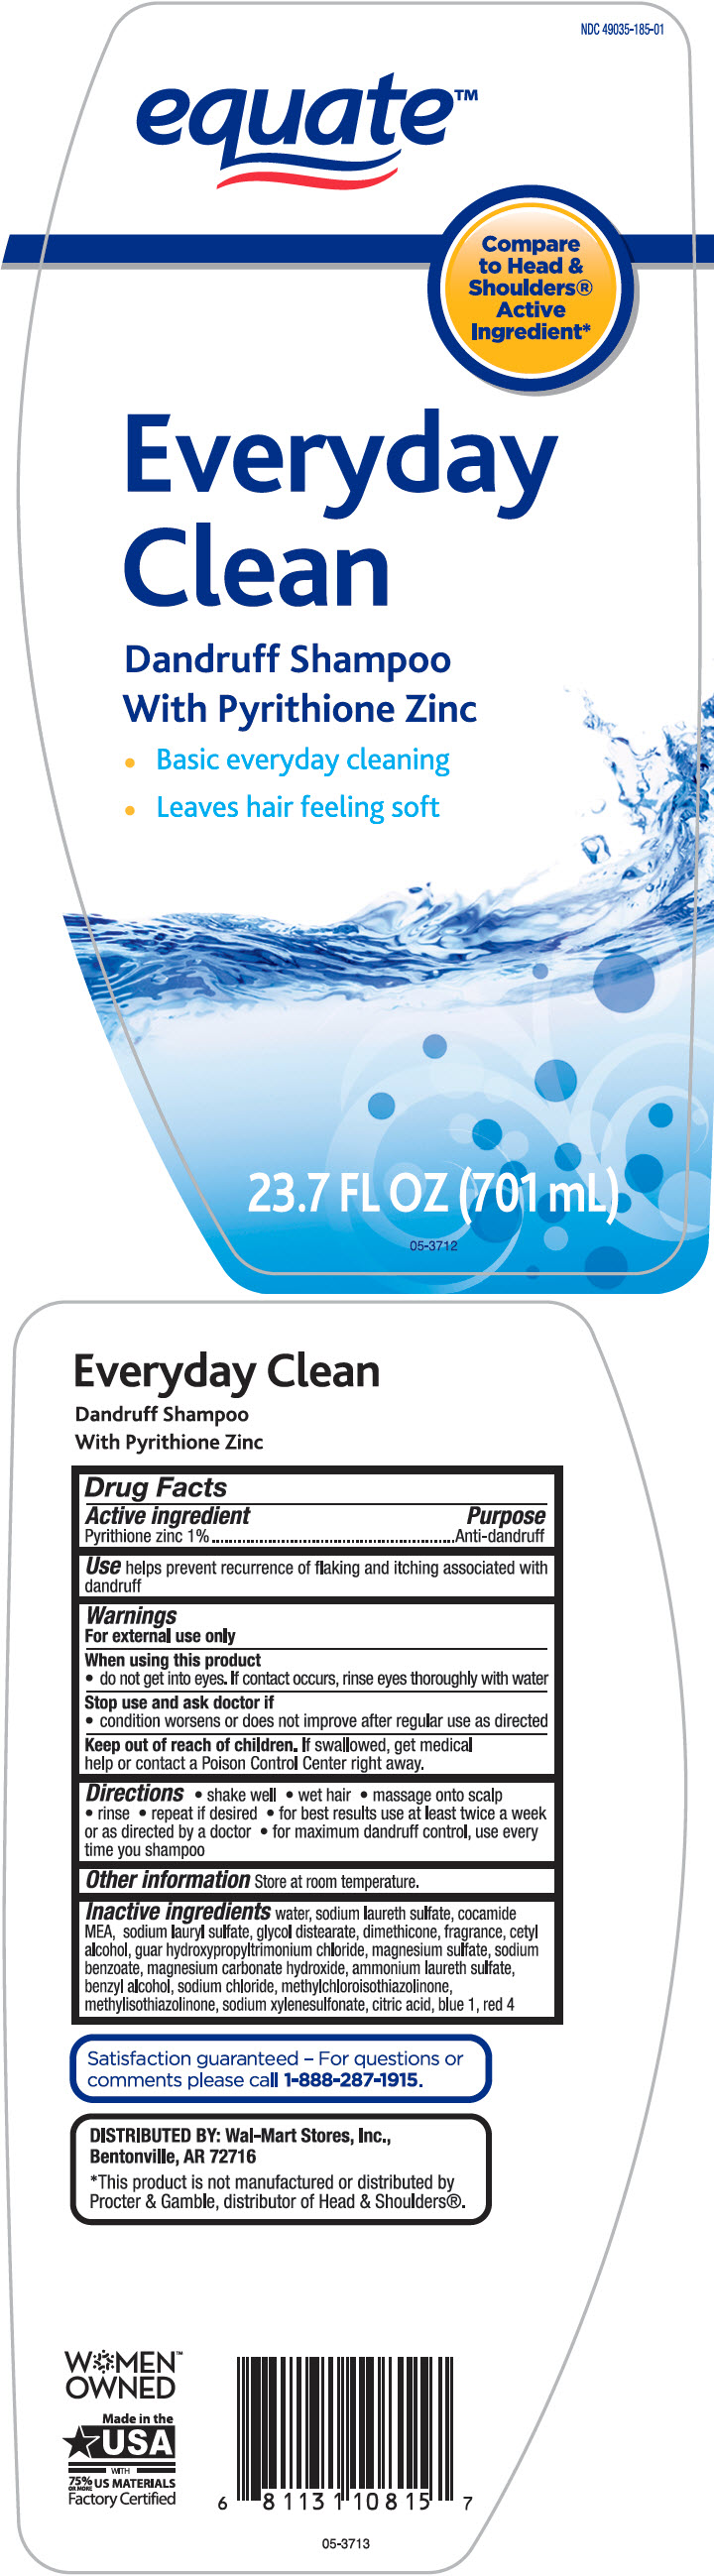 PRINCIPAL DISPLAY PANEL - 701 mL Bottle Label